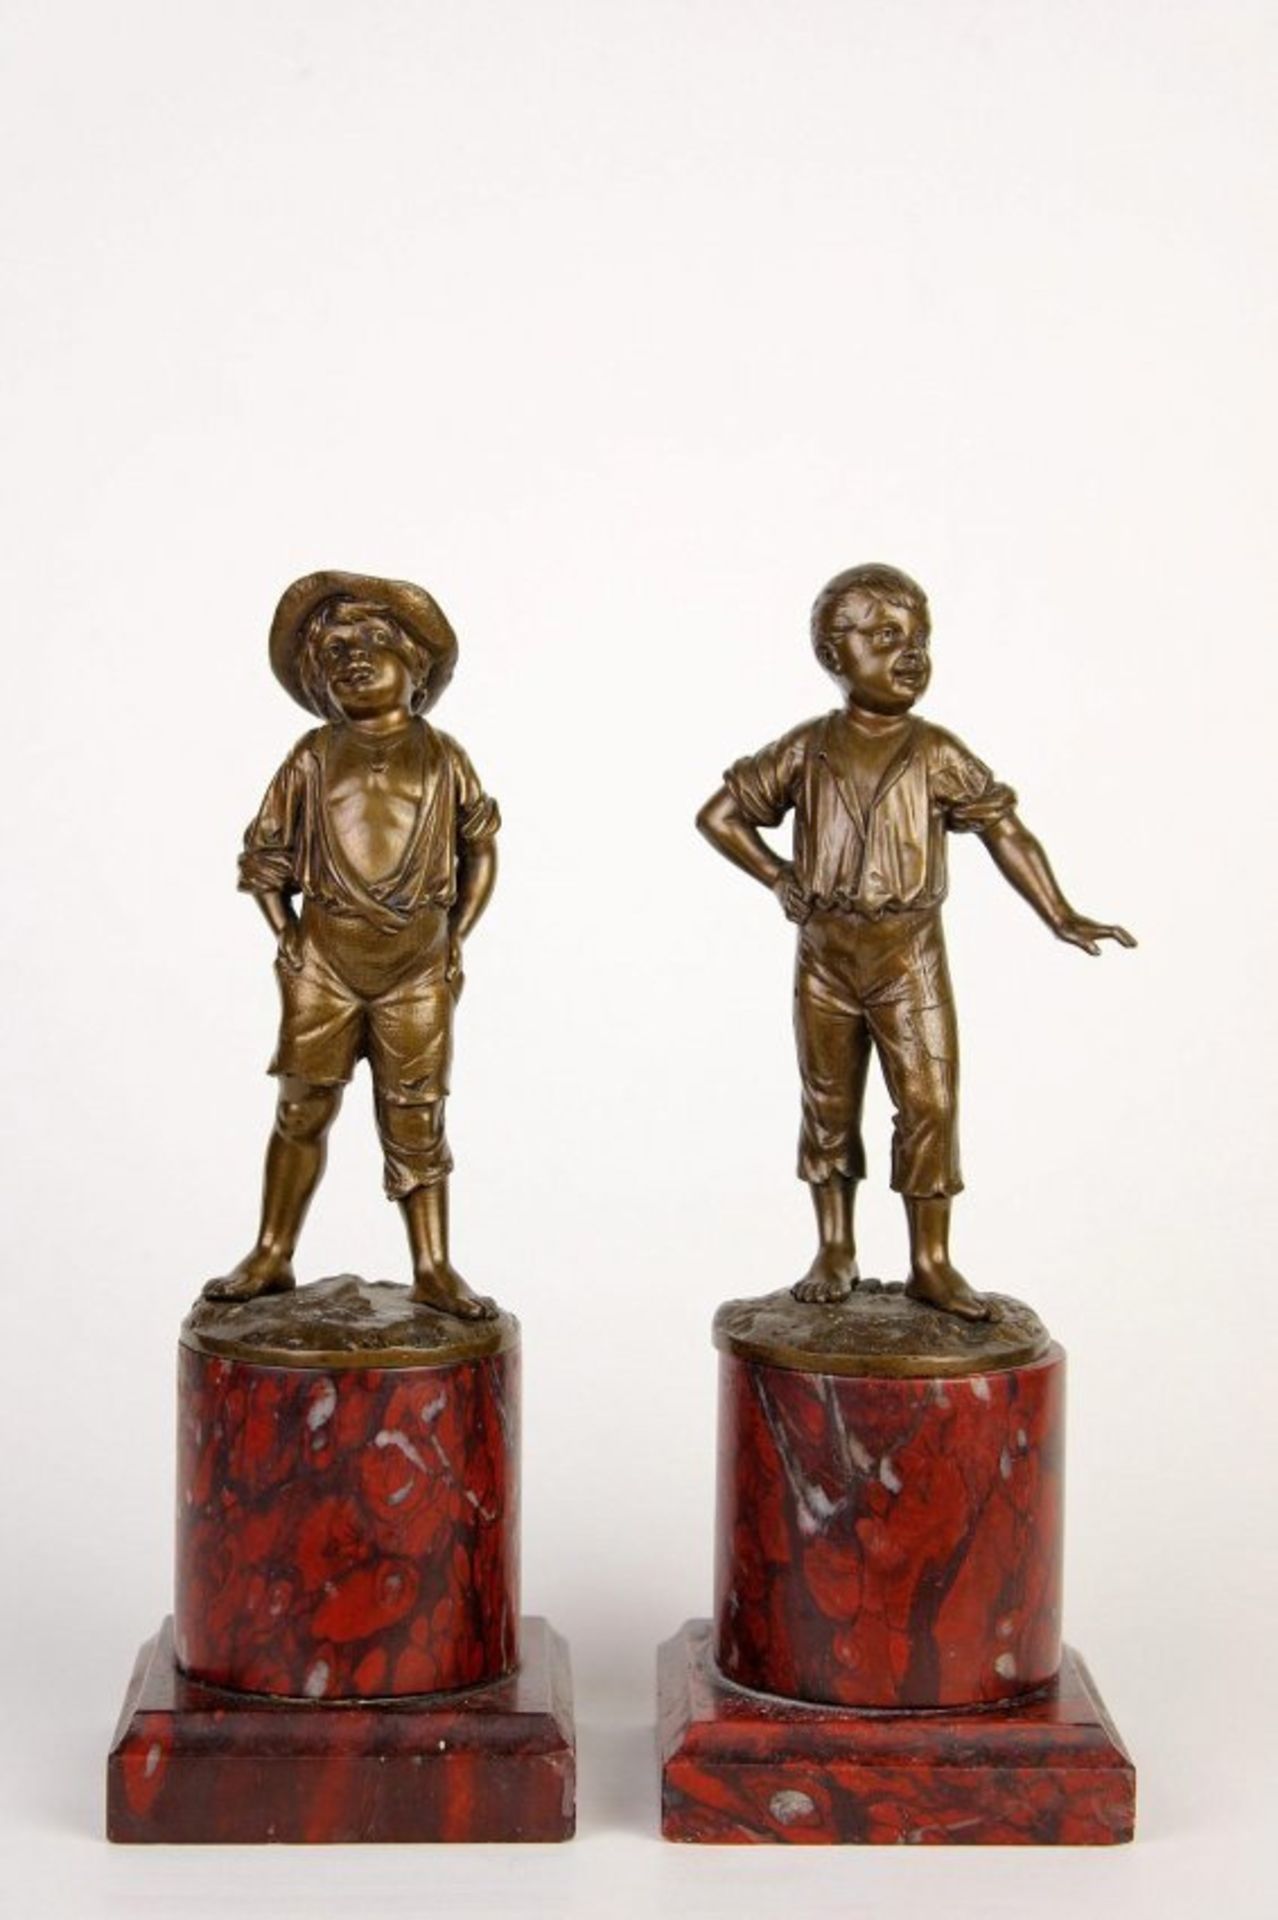 Antique bronze sculptures "Children"